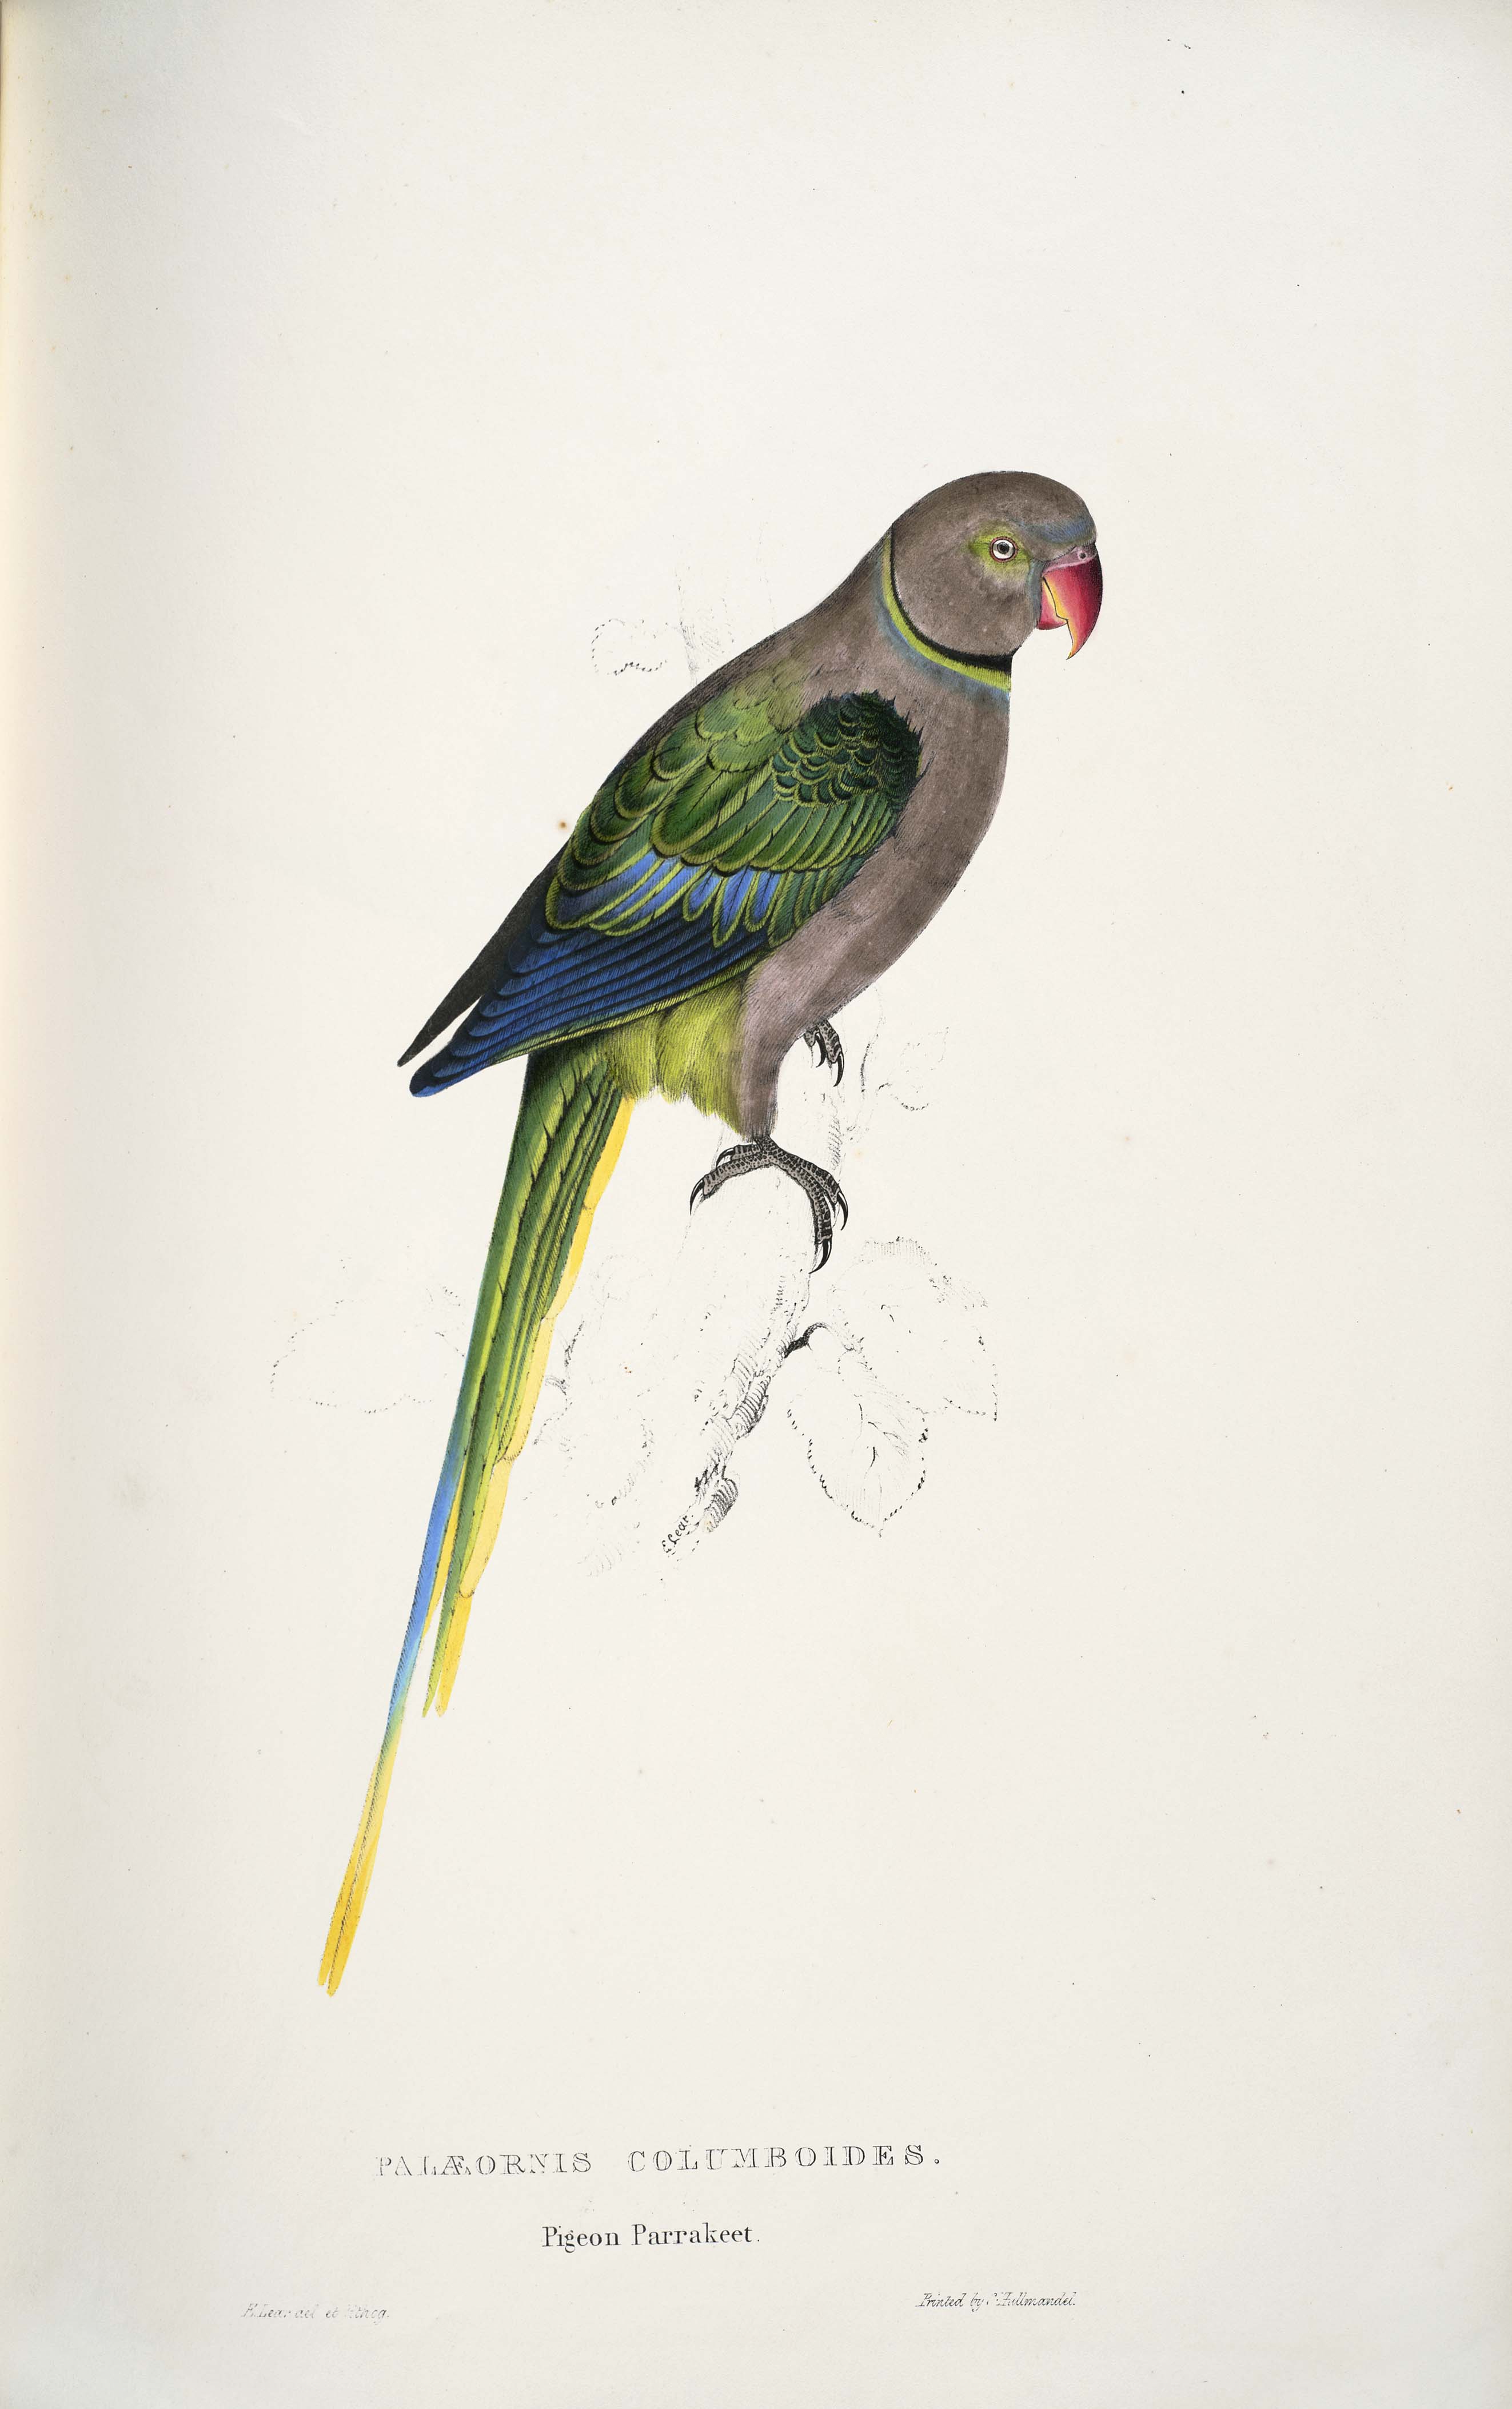 Psittacula columboides -Palaeornis columboides. Pigeon Parrakeet -by Edward Lear 1812-1888